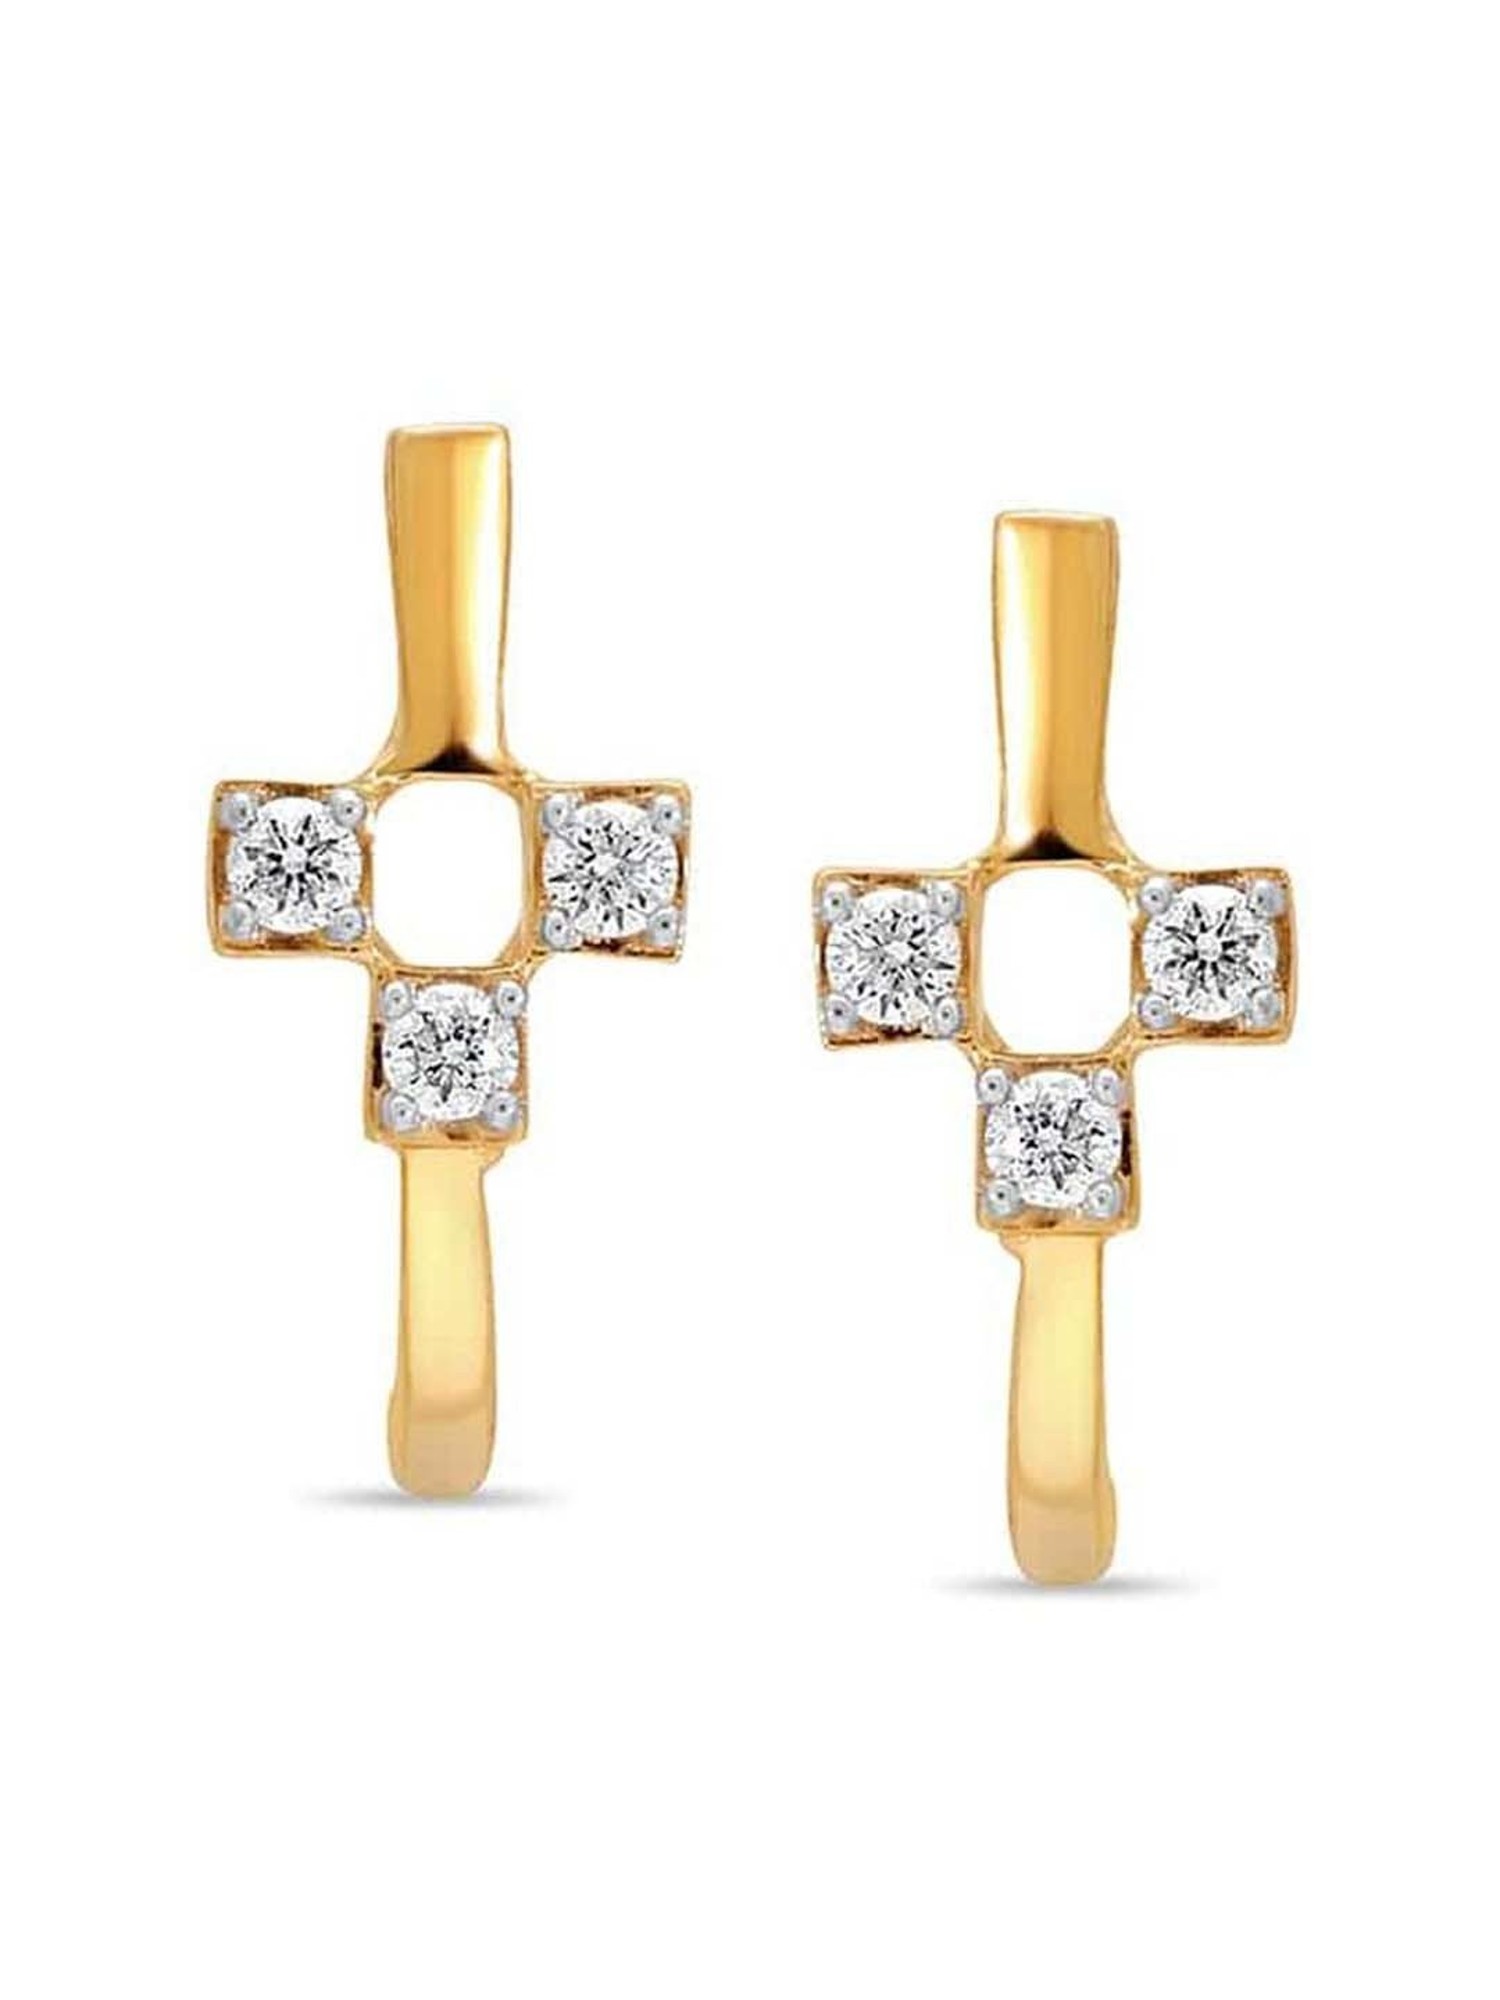 Buy 14K Yellow Gold Studs Earrings VER2033 Online from Vaibhav Jewellers